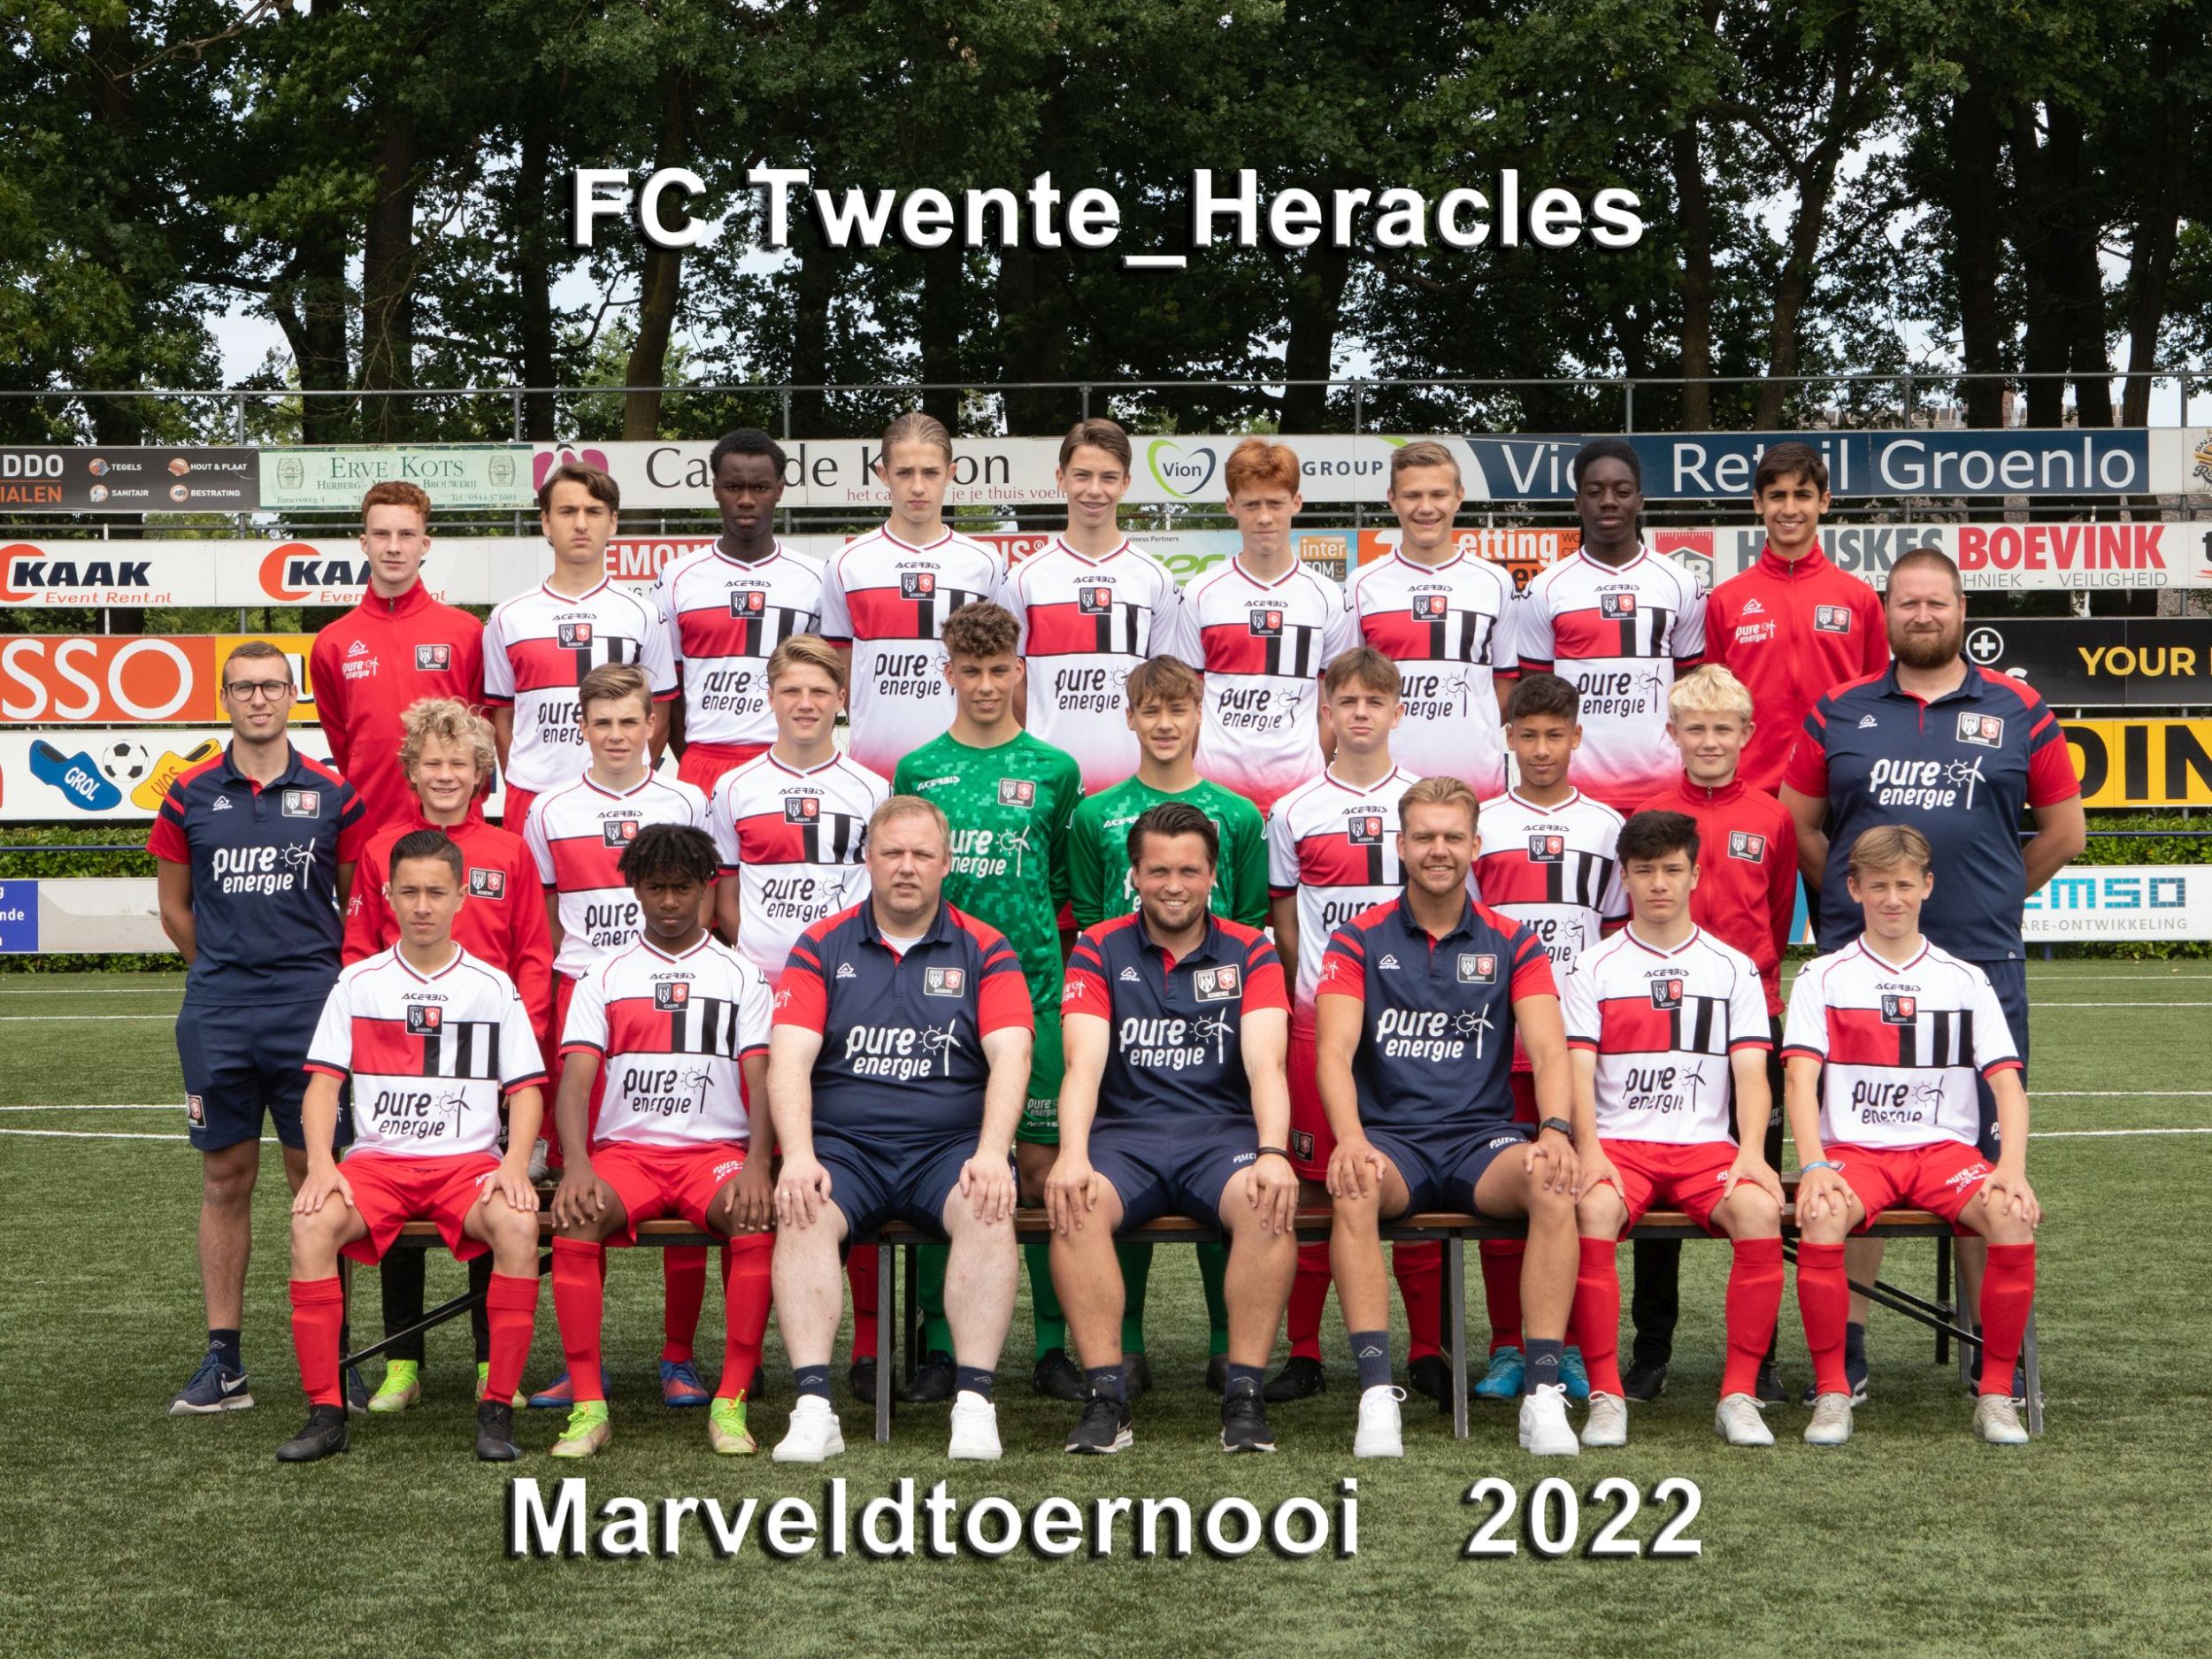 Marveld Tournament 2022 - Team FC Twente/Heracles